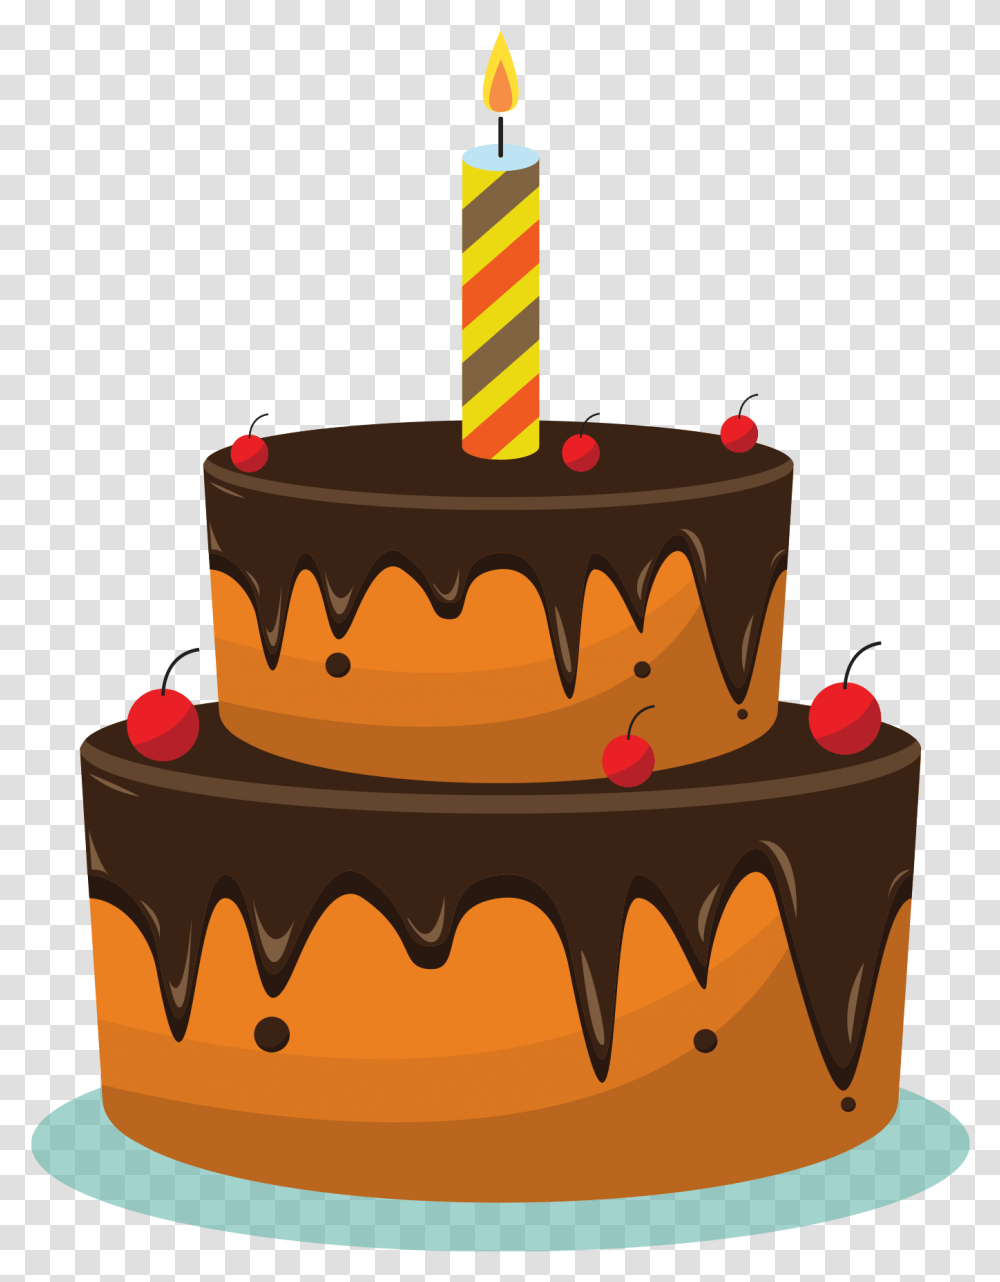 Chocolate Cake Image Free Download Birthday, Dessert, Food, Birthday Cake, Icing Transparent Png